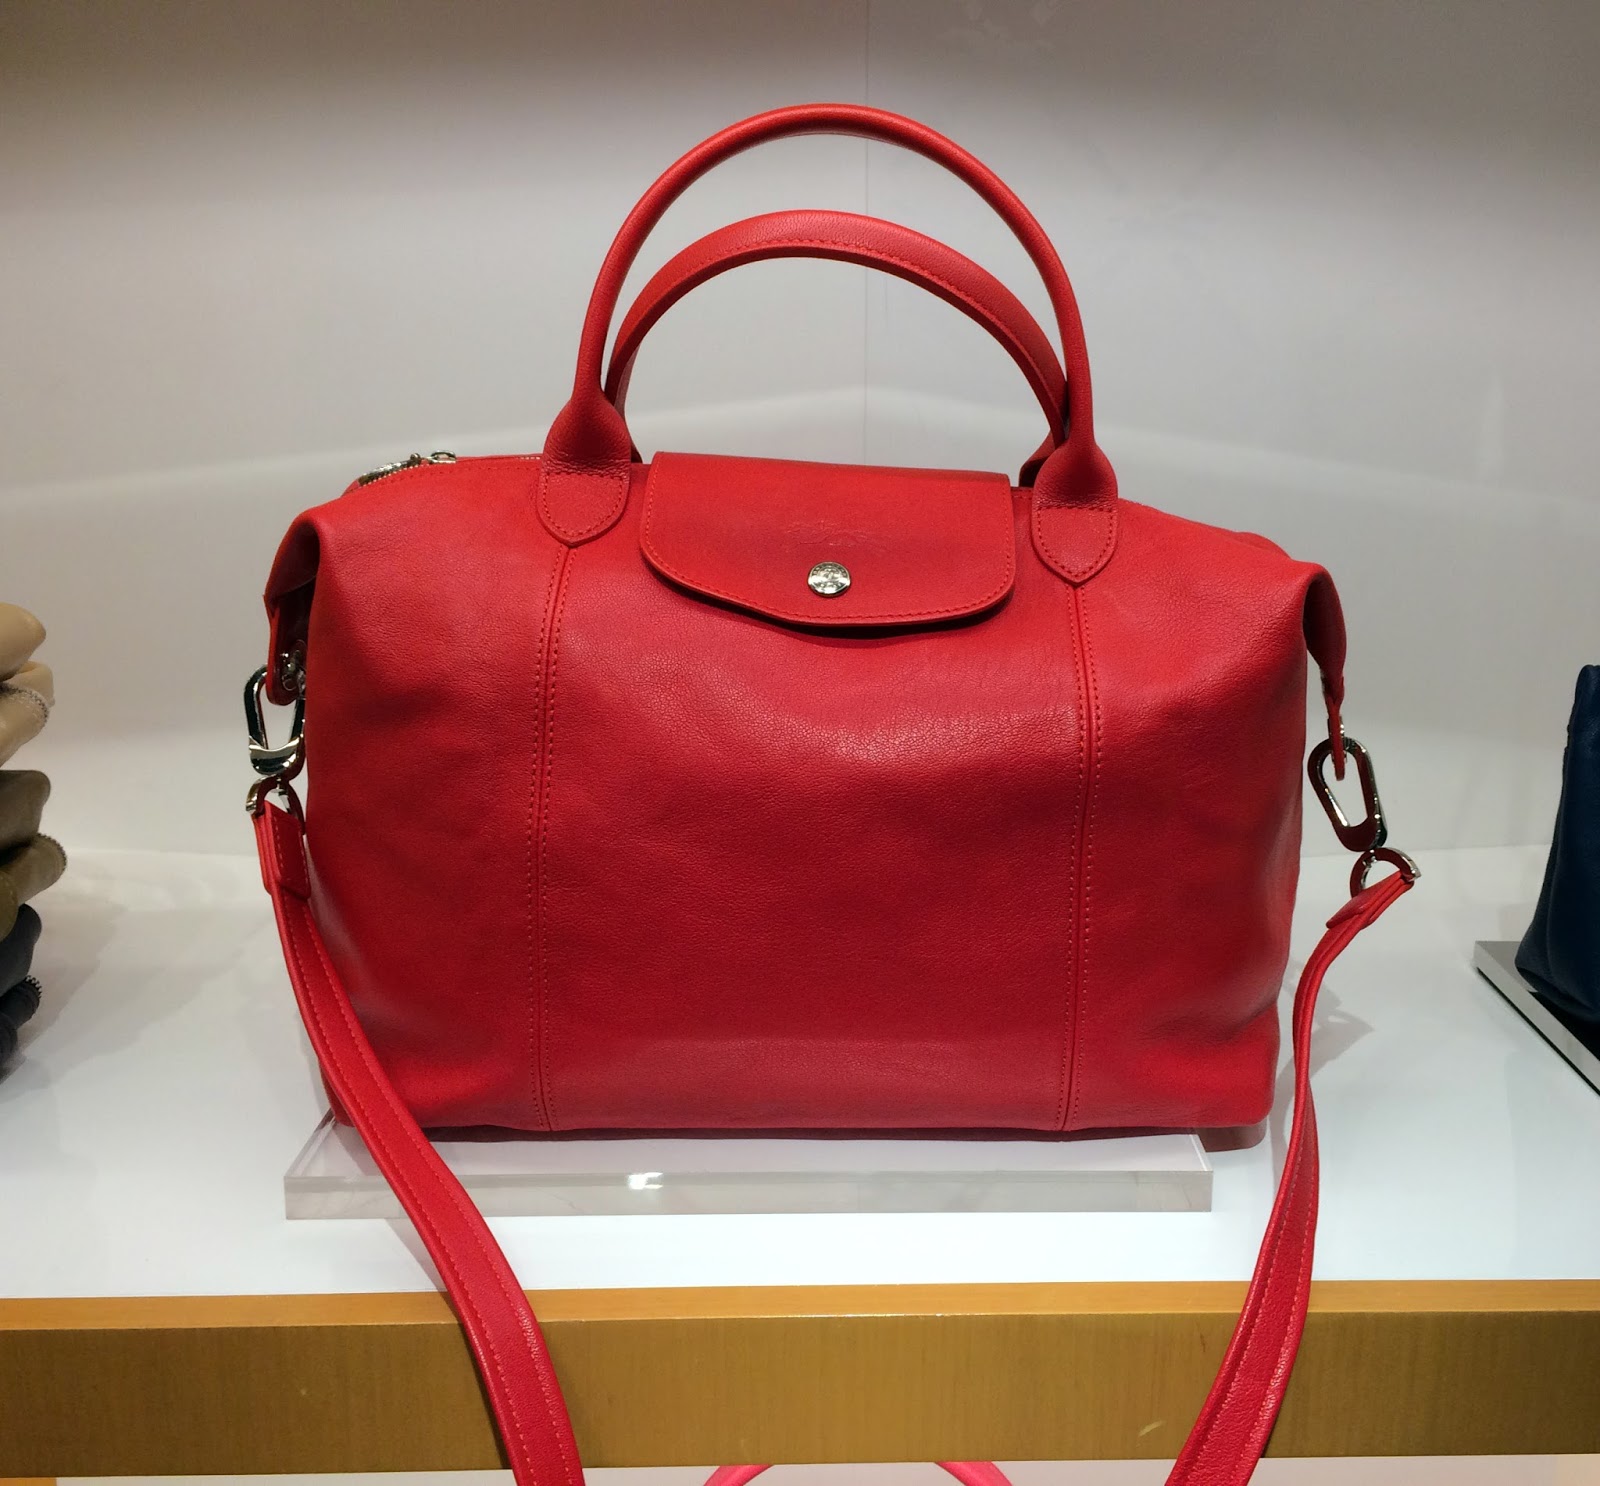 My First Chanel Bag! + Longchamp and Sam Edelman Reviews